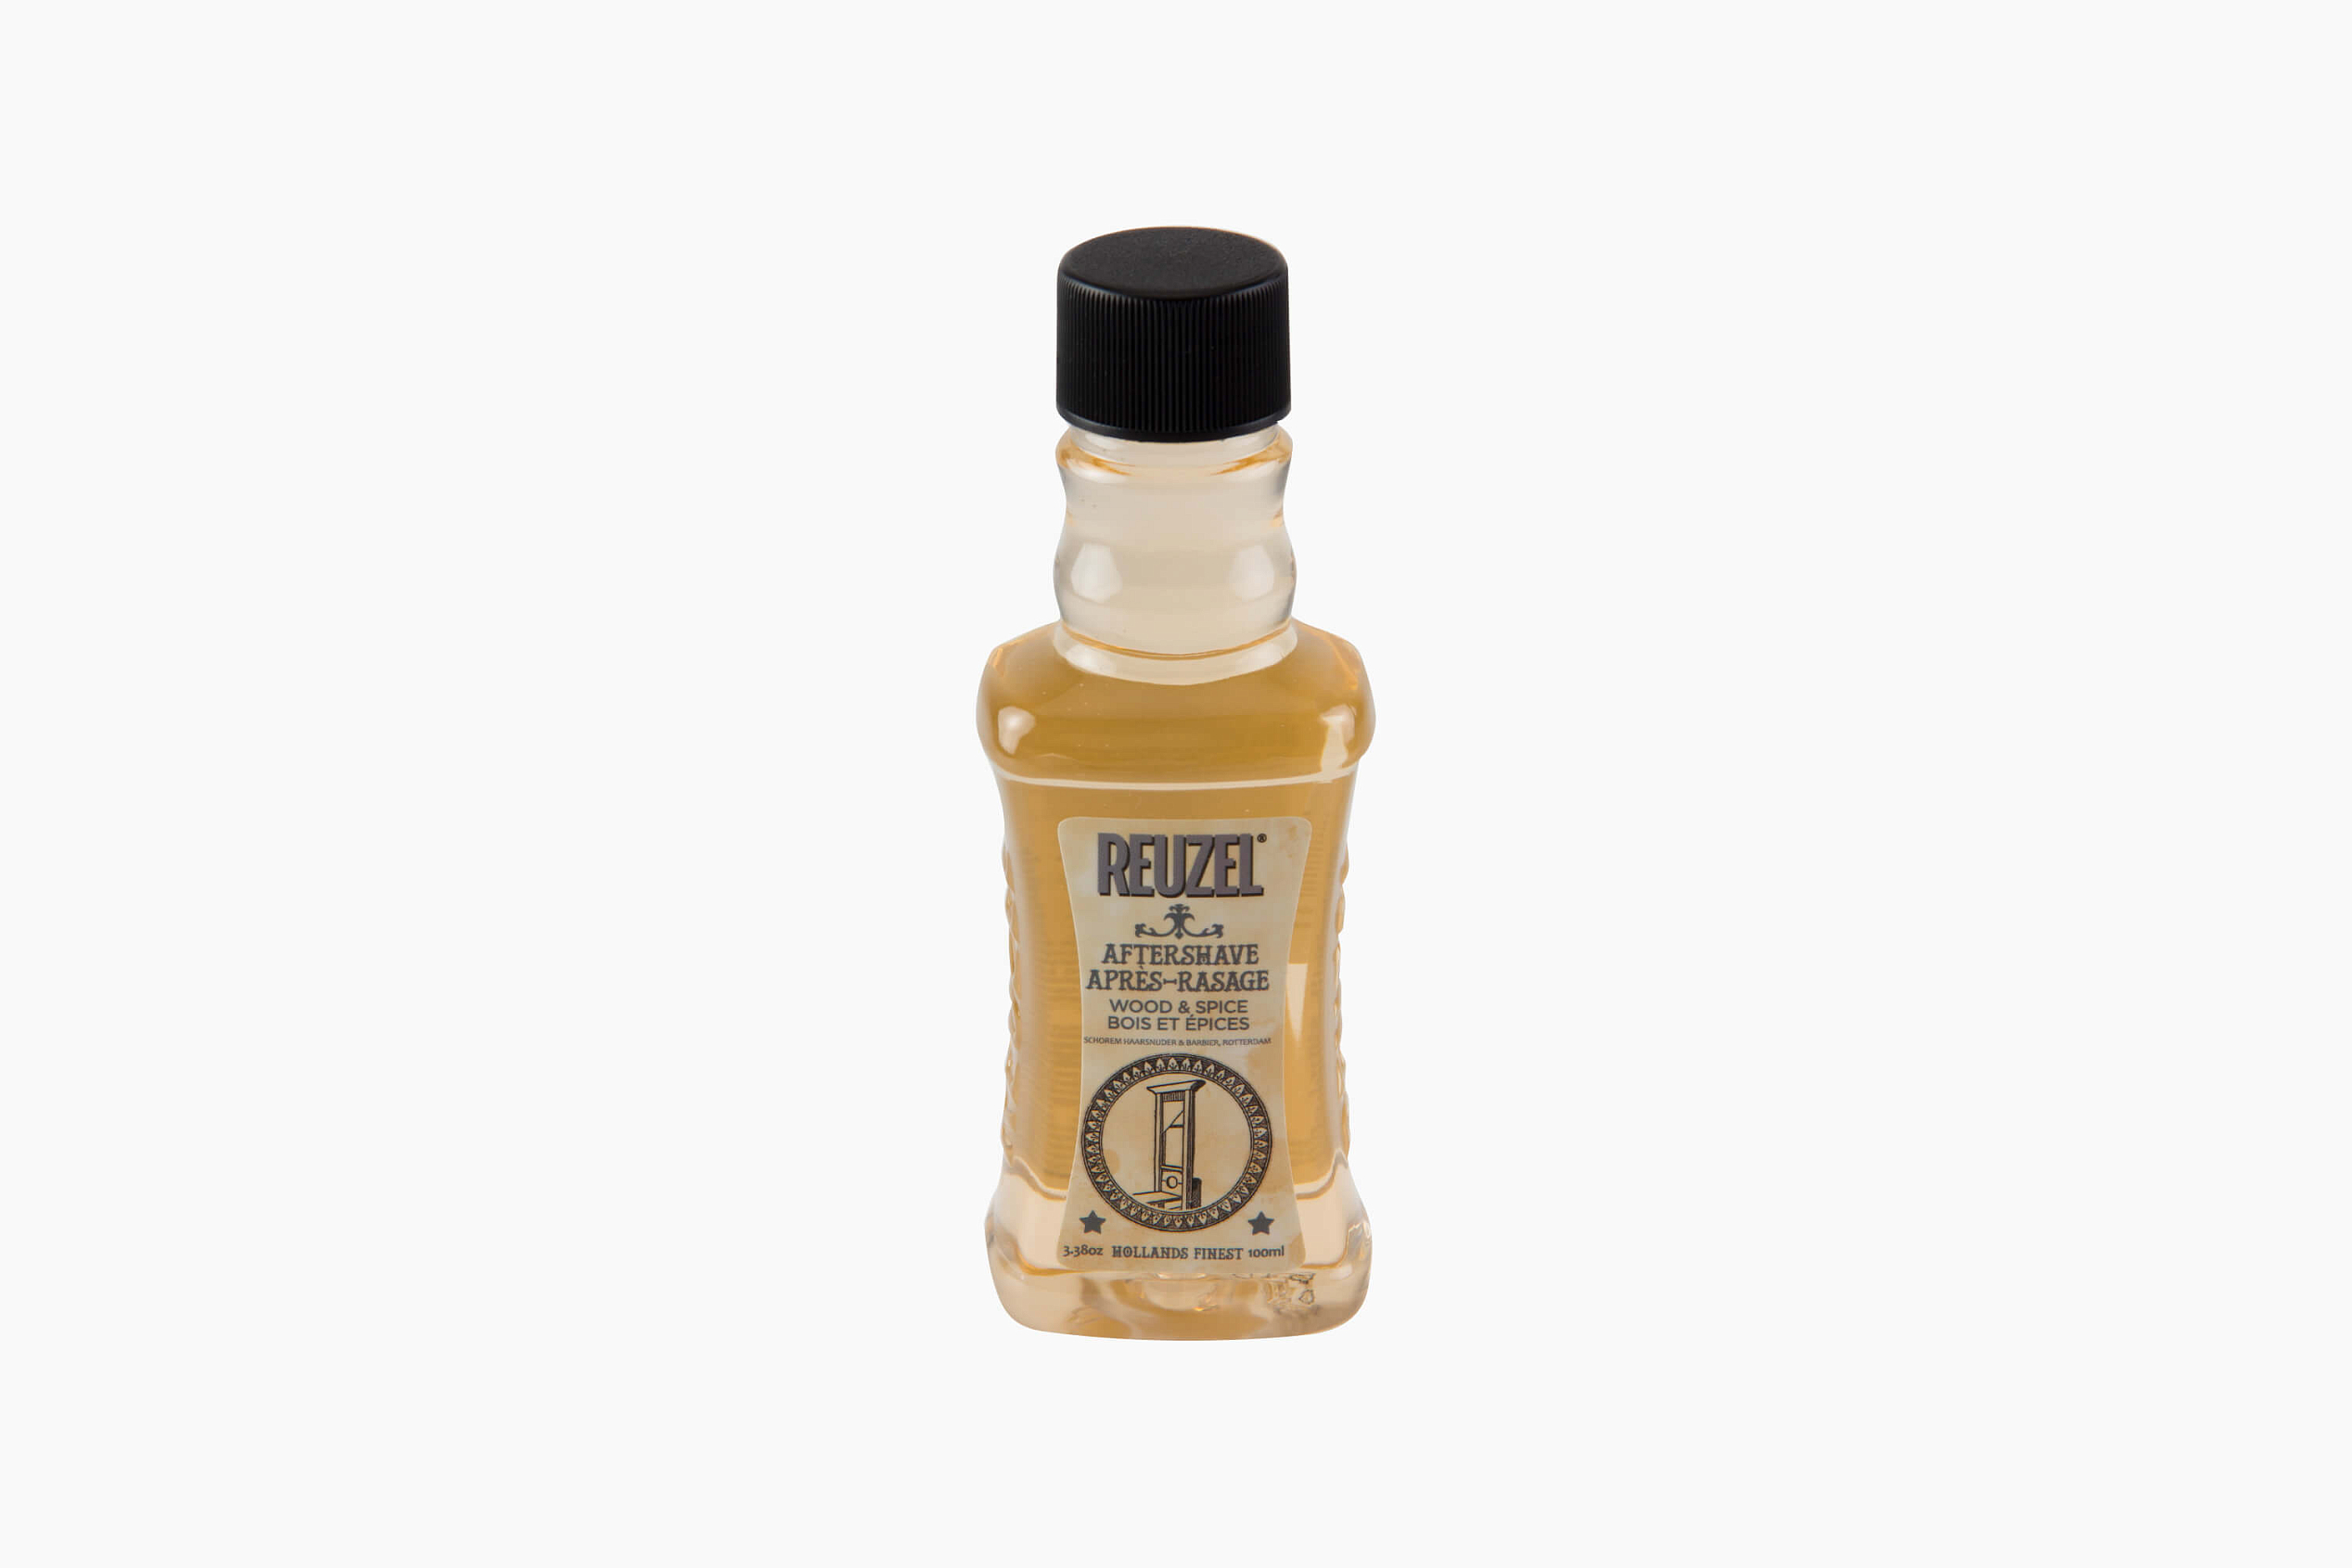 Reuzel Wood & Spice Aftershave фото 1